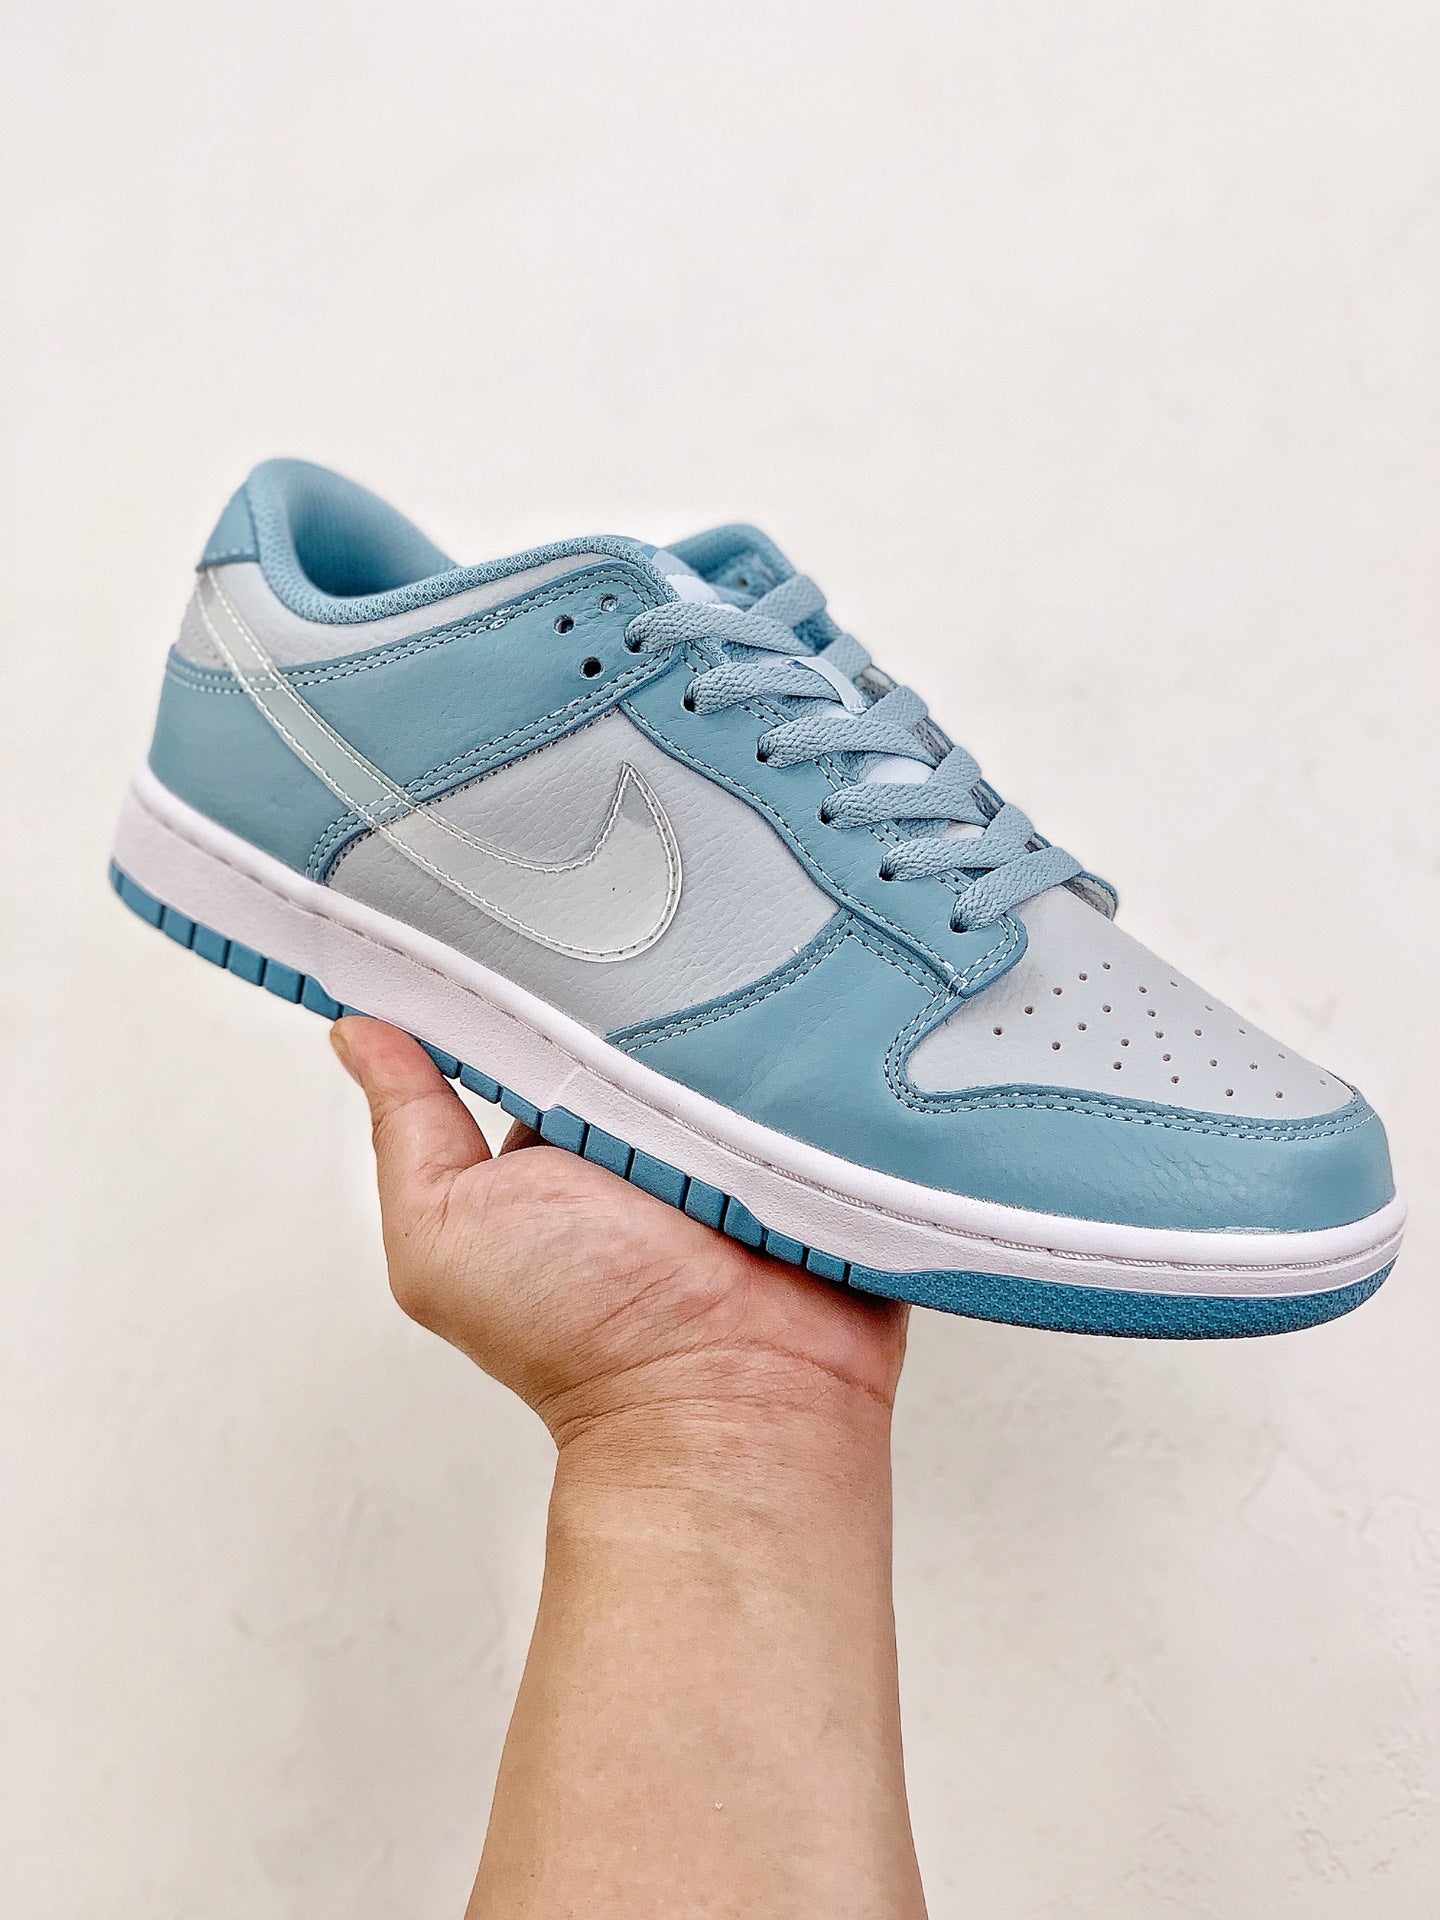 Nike SB Dunk Low  "Blue Gray "